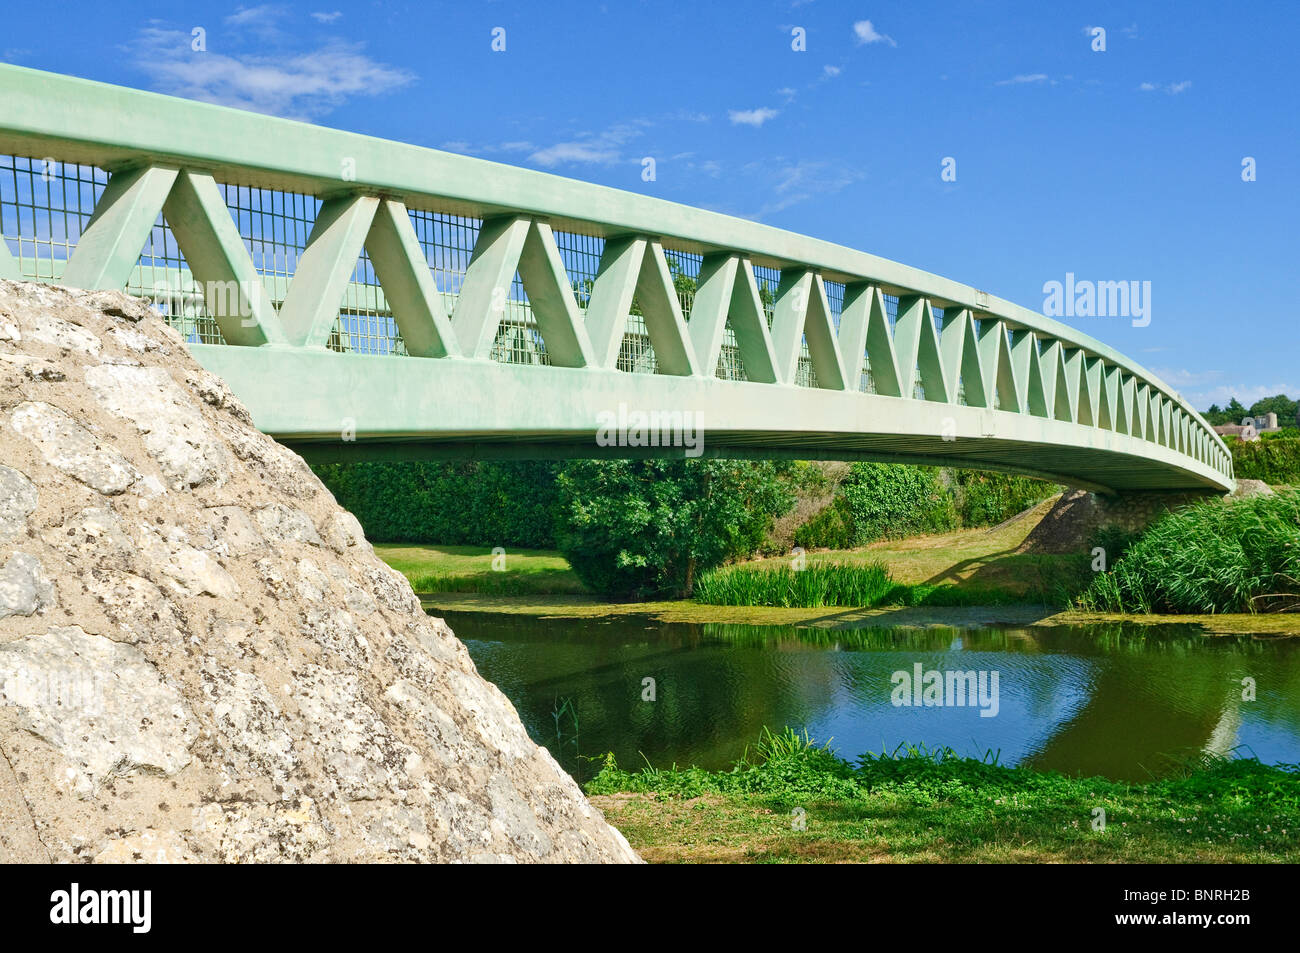 Modern metal single span arch bridge over river - Preuilly-sur-Claise, France. Stock Photo